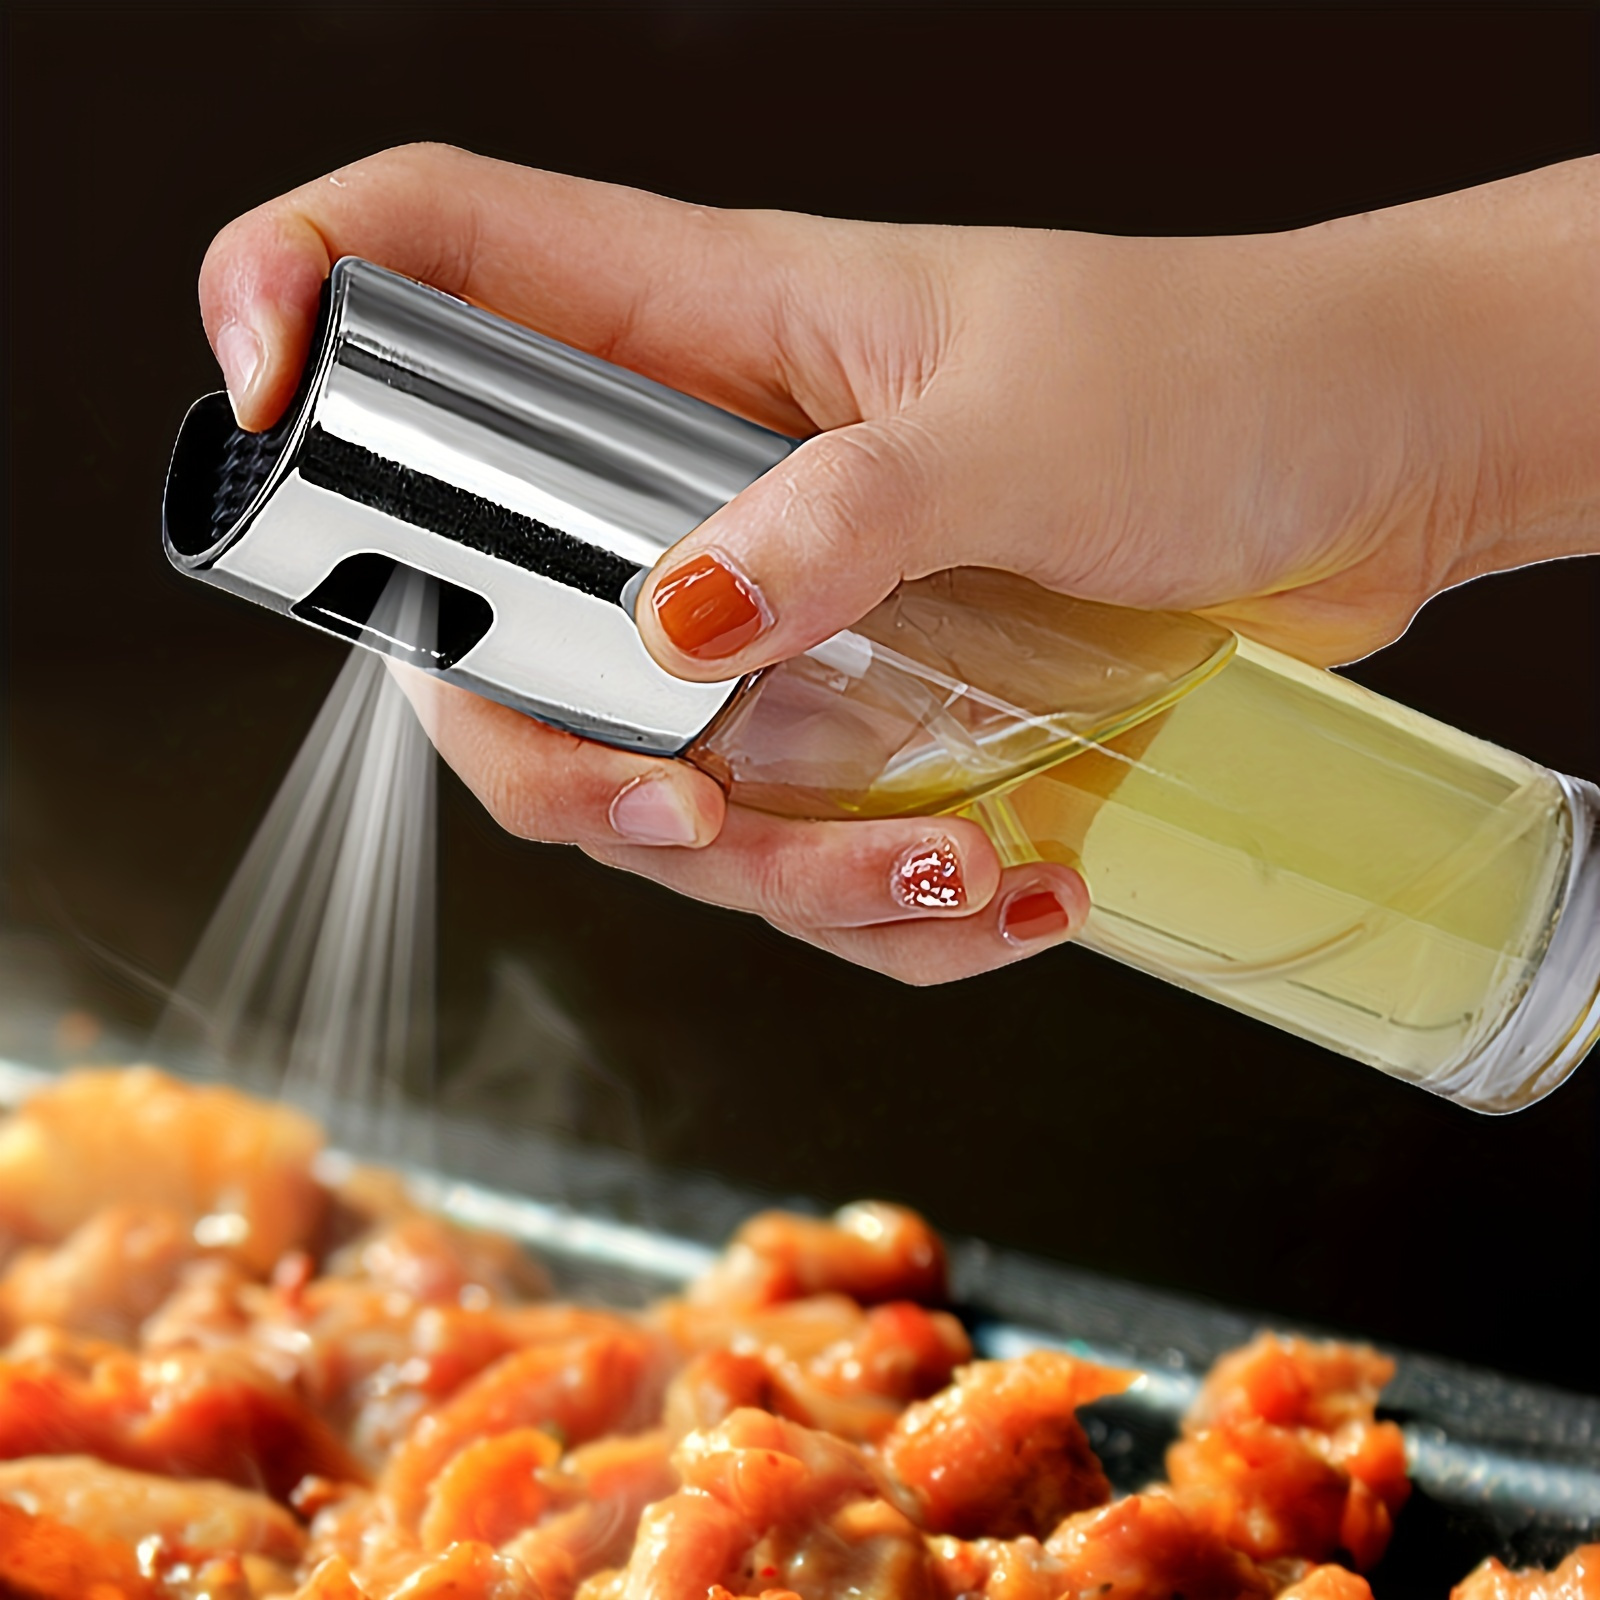 

1pc Olive Oil Sprayer Spritzer Bottle For Cooking Oil Dispenser Vinegar Bottle Air Fryer Kitchen Cooking Frying Salad Baking Bbq, 100ml